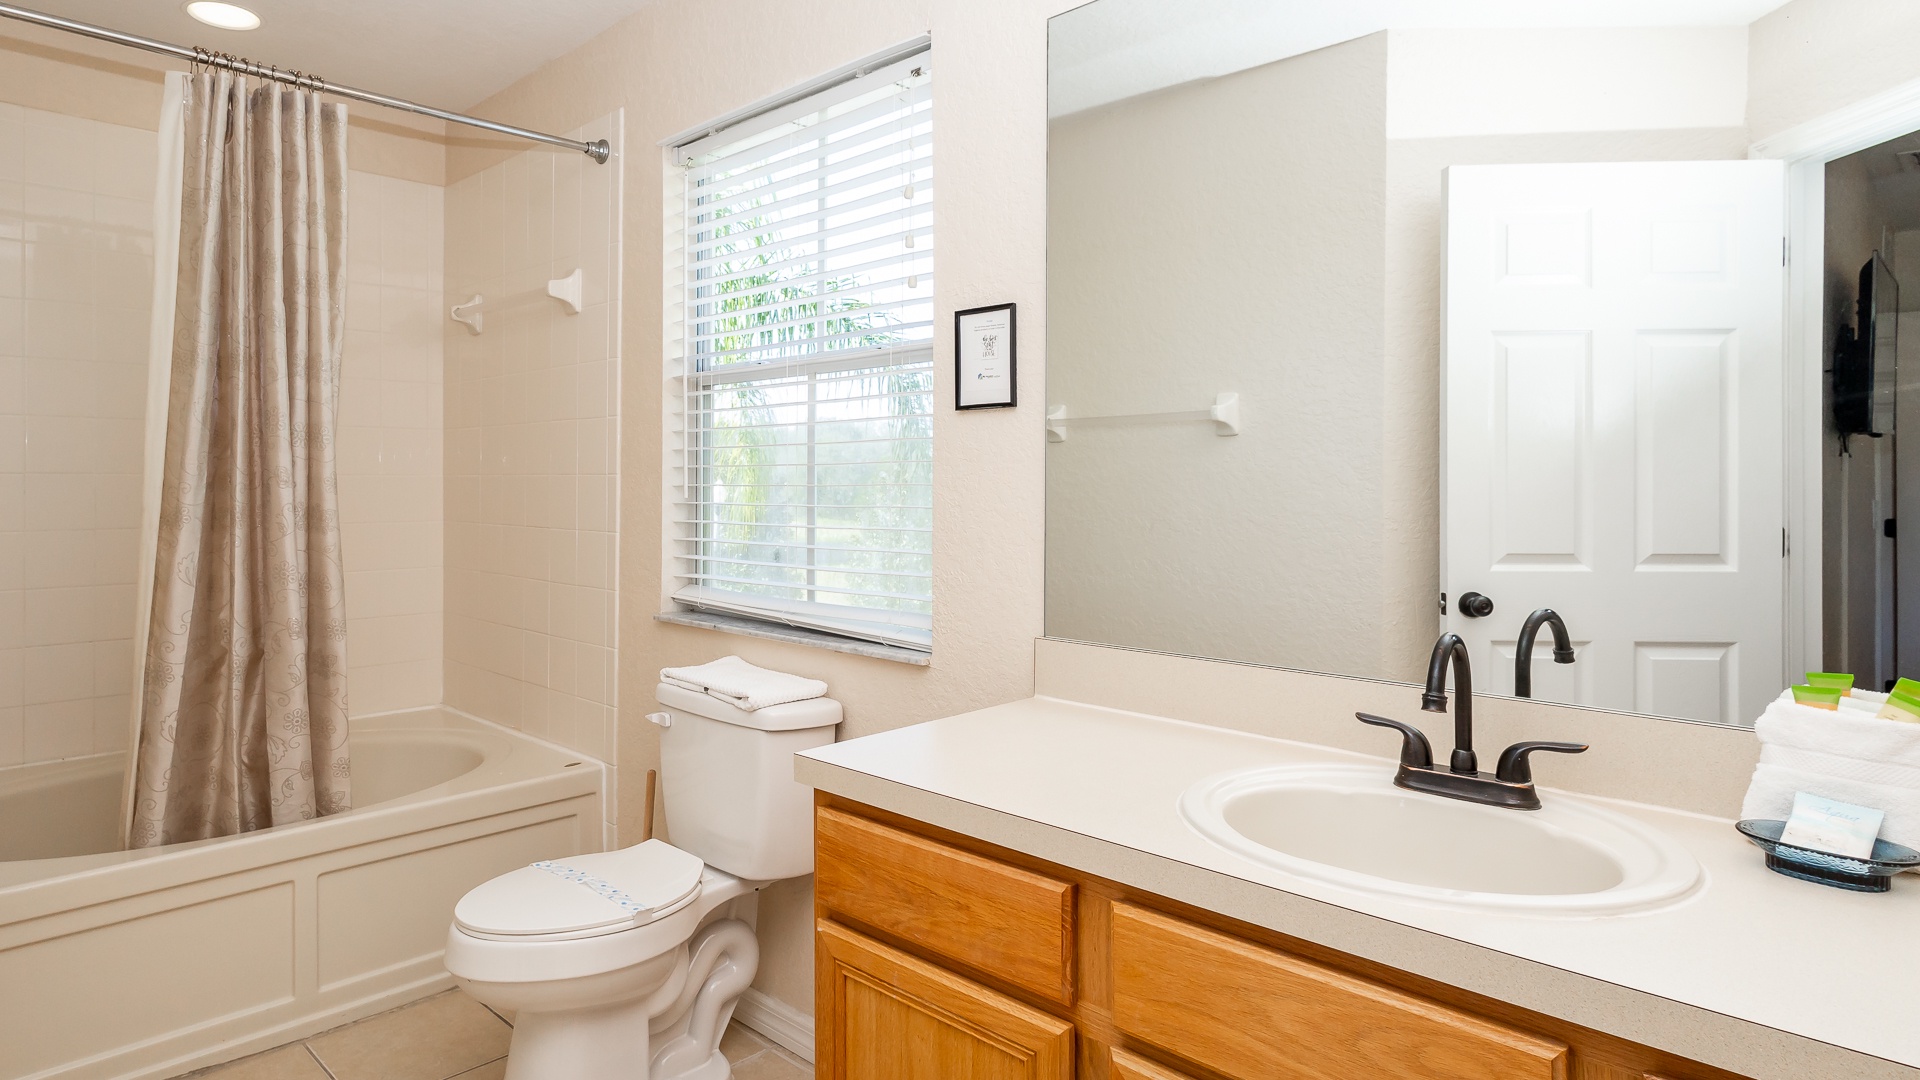 The king en suite bathroom includes a single vanity & shower/tub combo